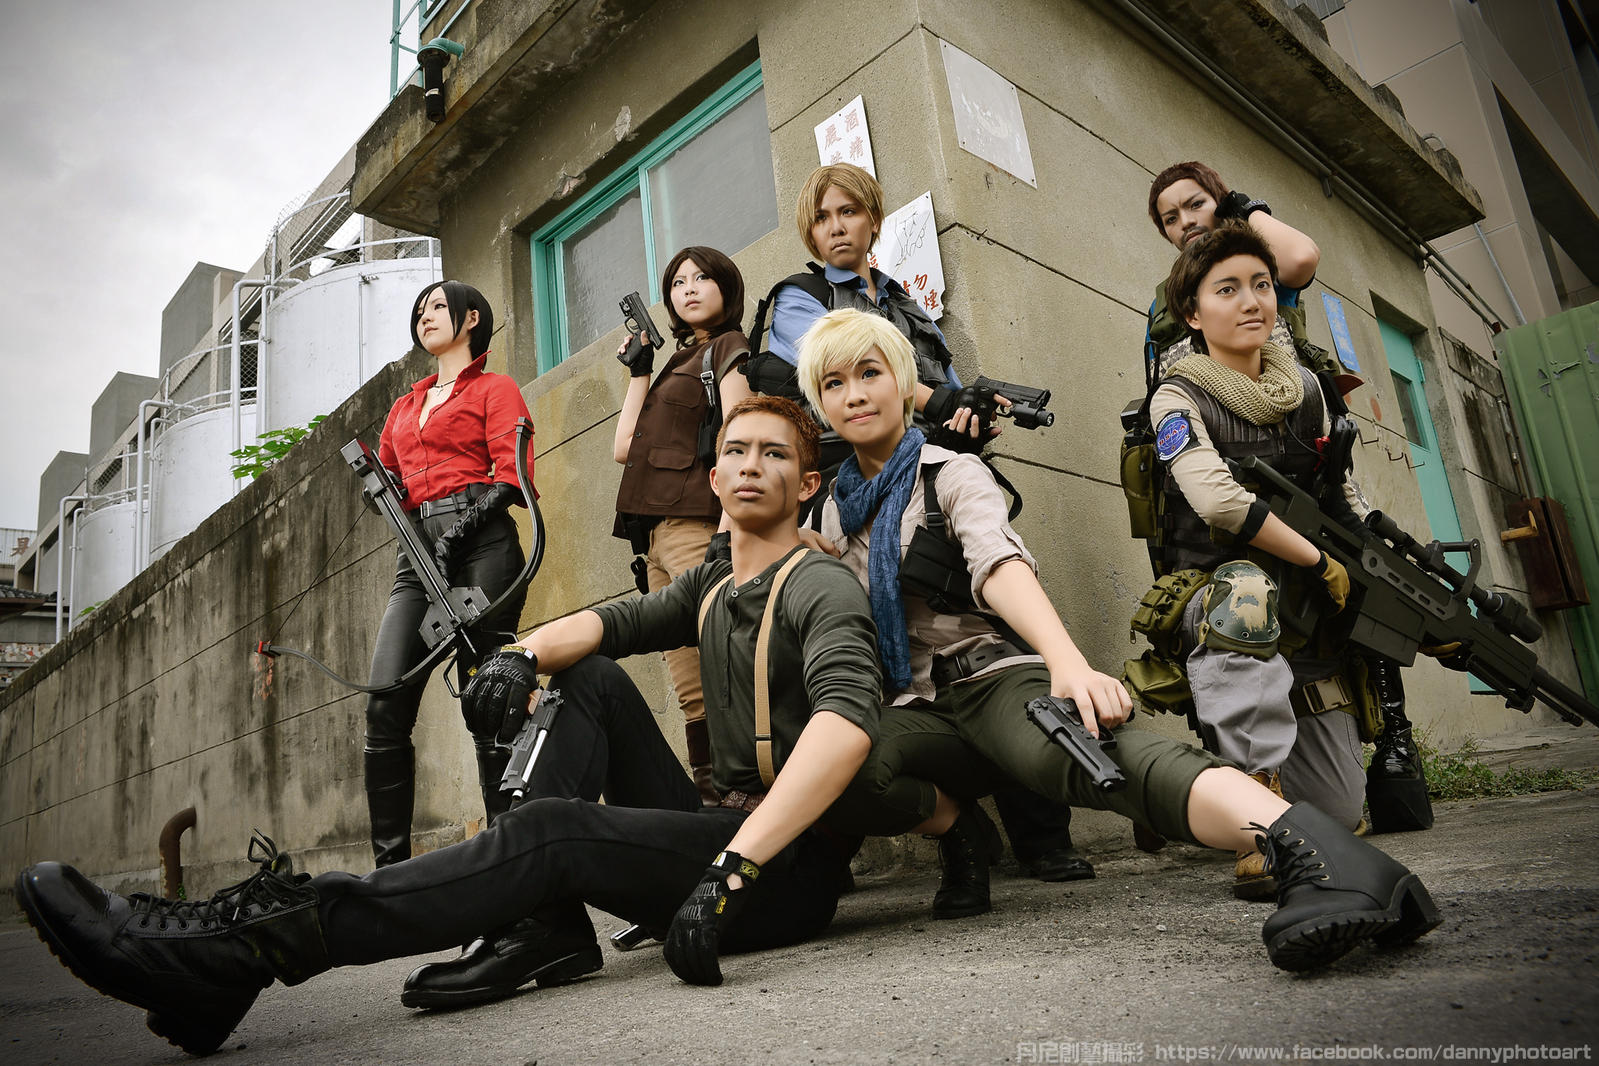 Resident Evil 6/Ada Wong by 0kasane0 on DeviantArt